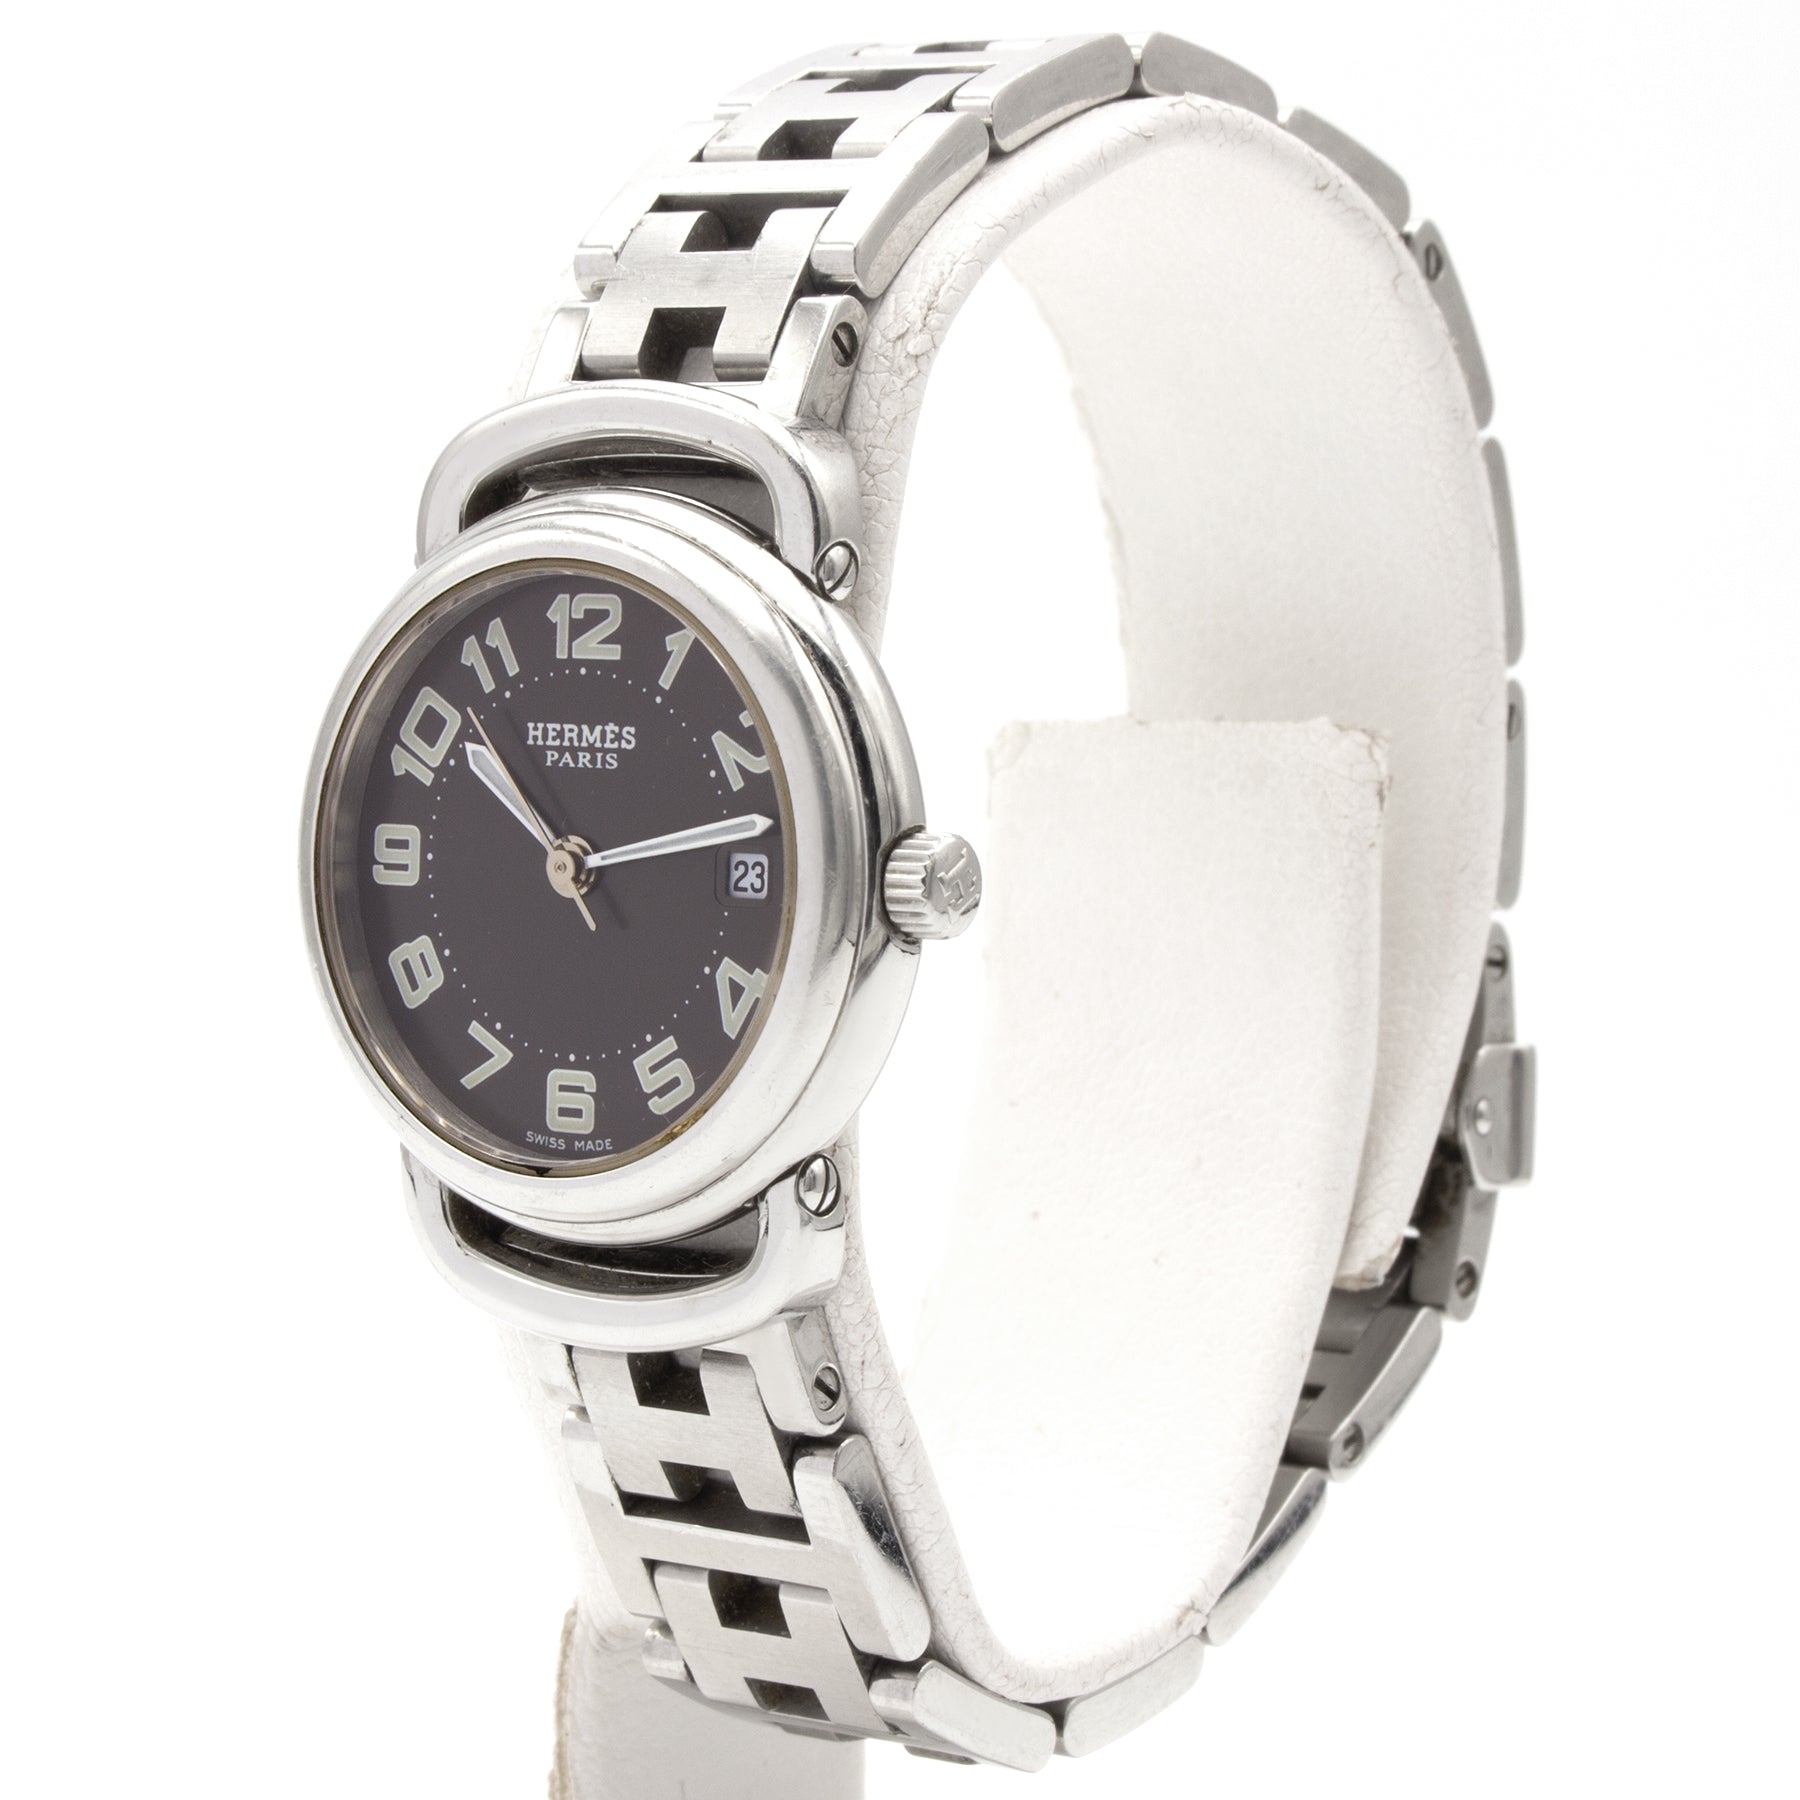 Dakota Watch Company Watches - Newegg.com